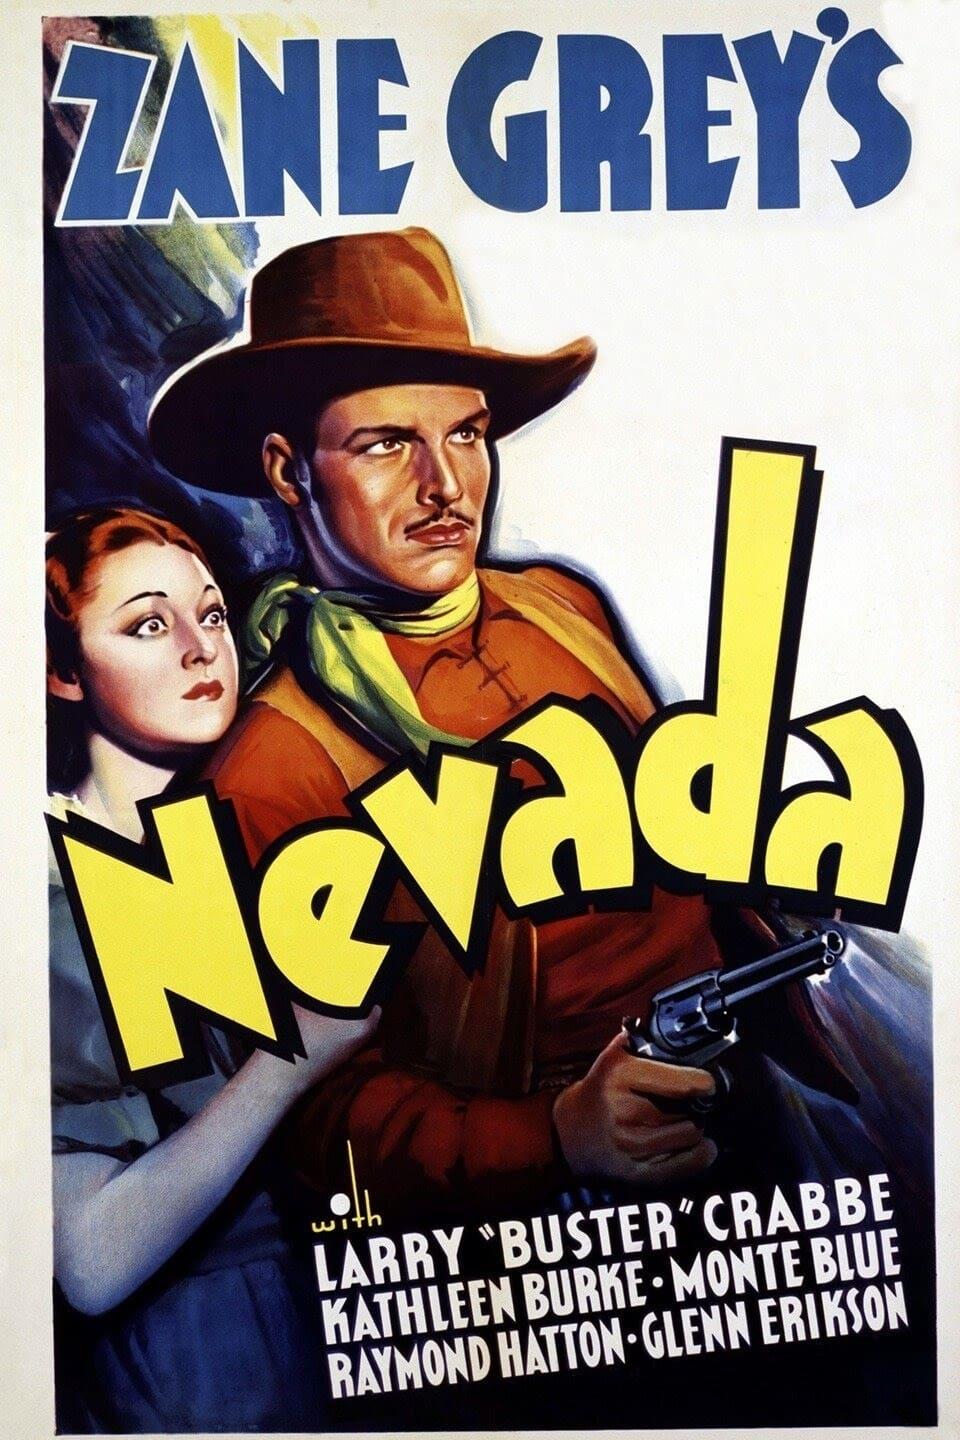 Nevada poster